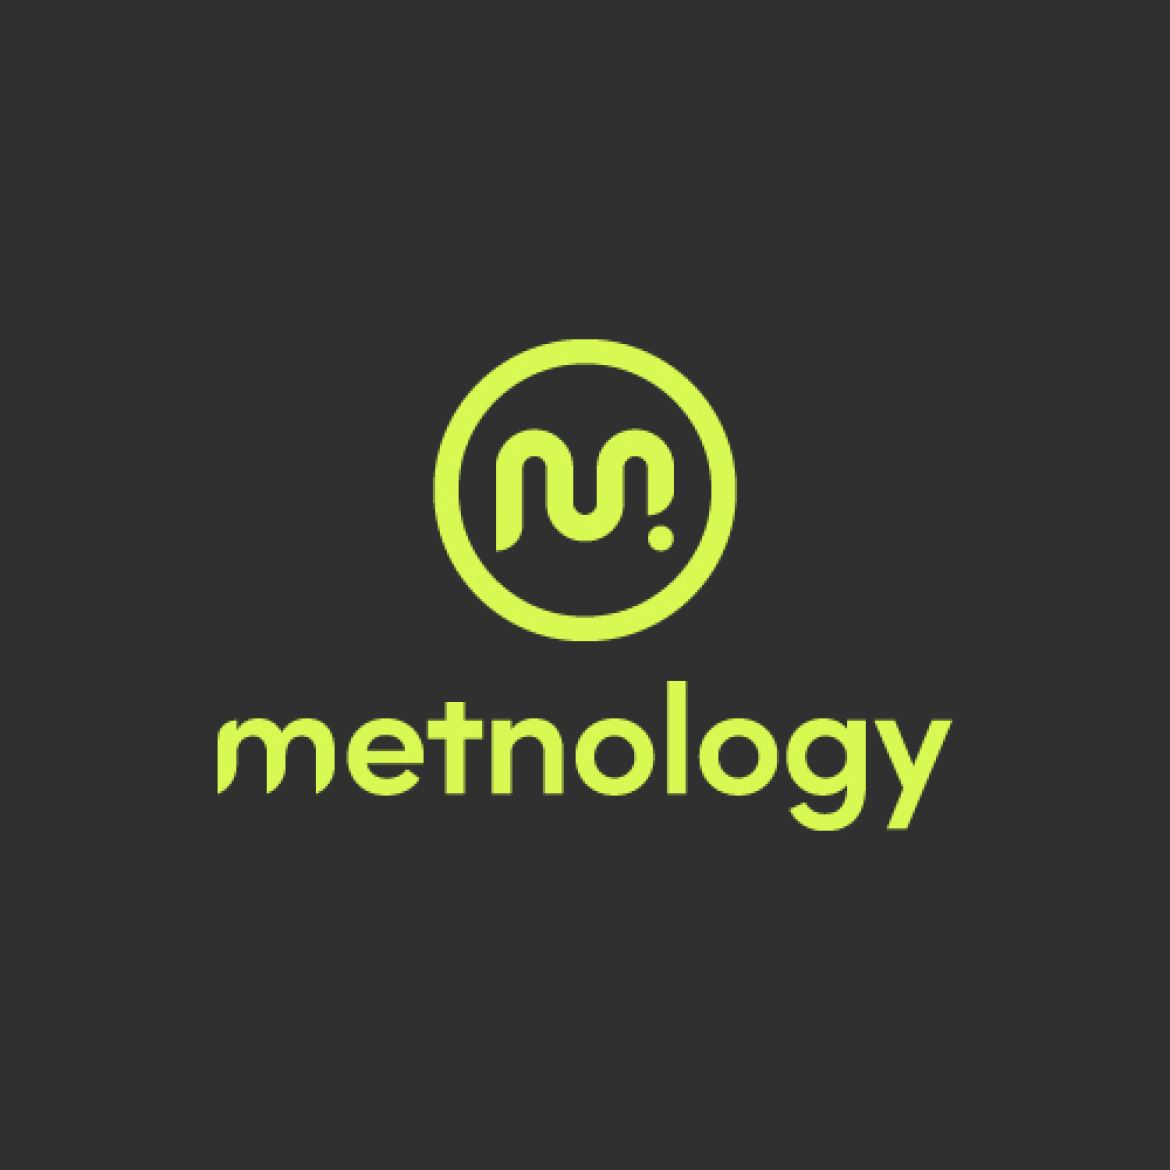 Metnology -  Technology | Software